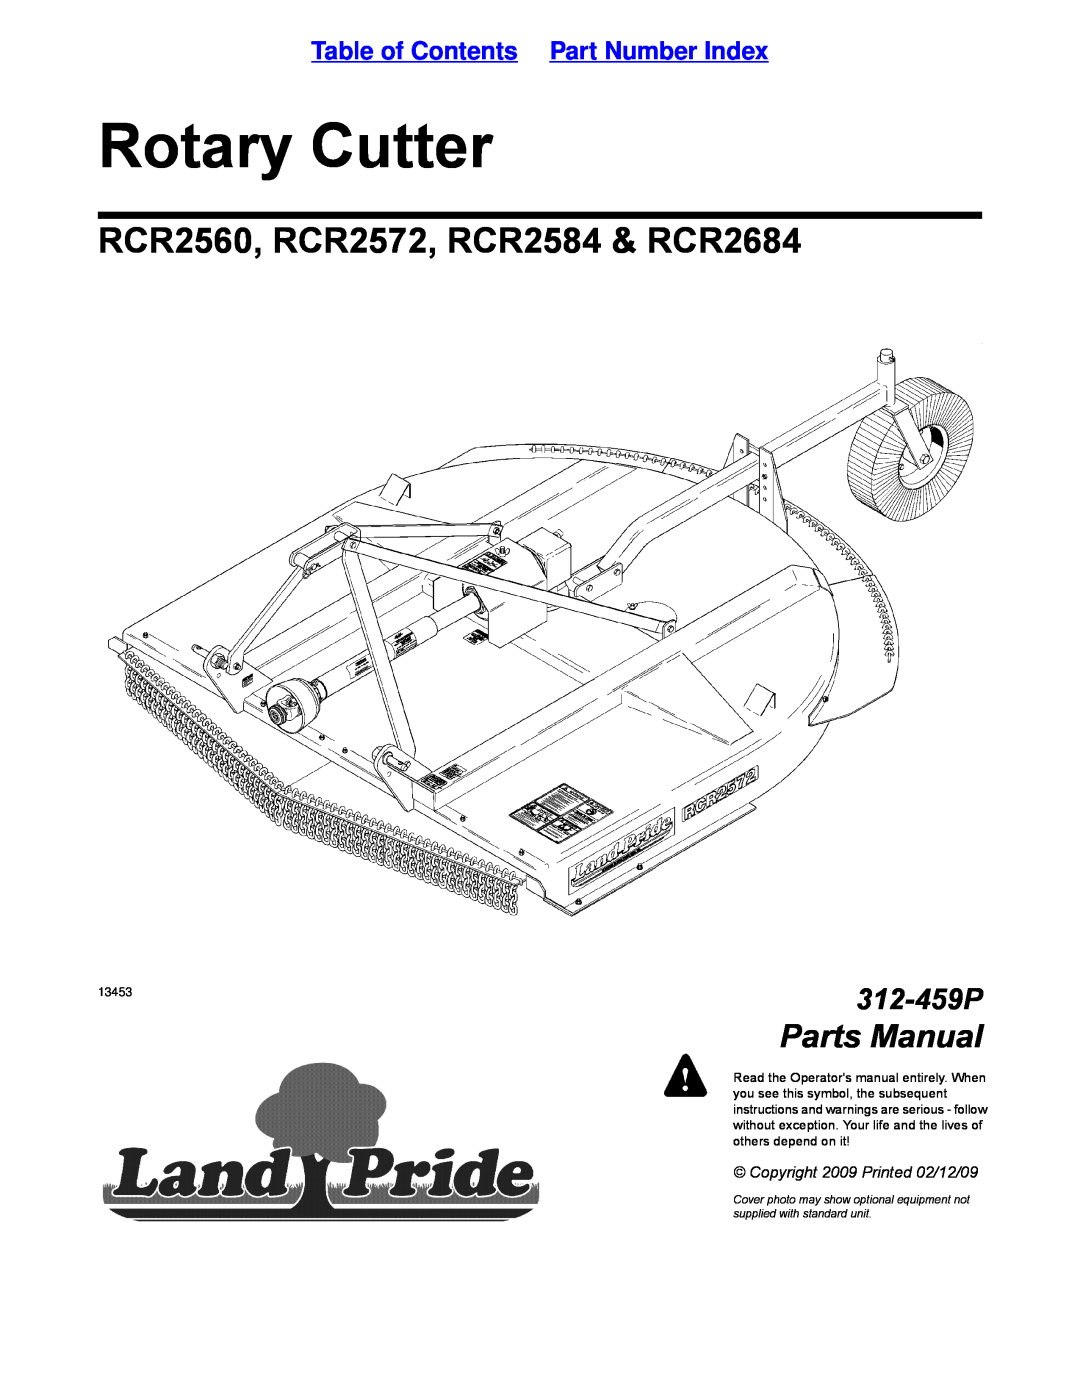 Land Pride manual Table of Contents Part Number Index, Rotary Cutter, RCR2560, RCR2572, RCR2584 & RCR2684, Parts Manual 